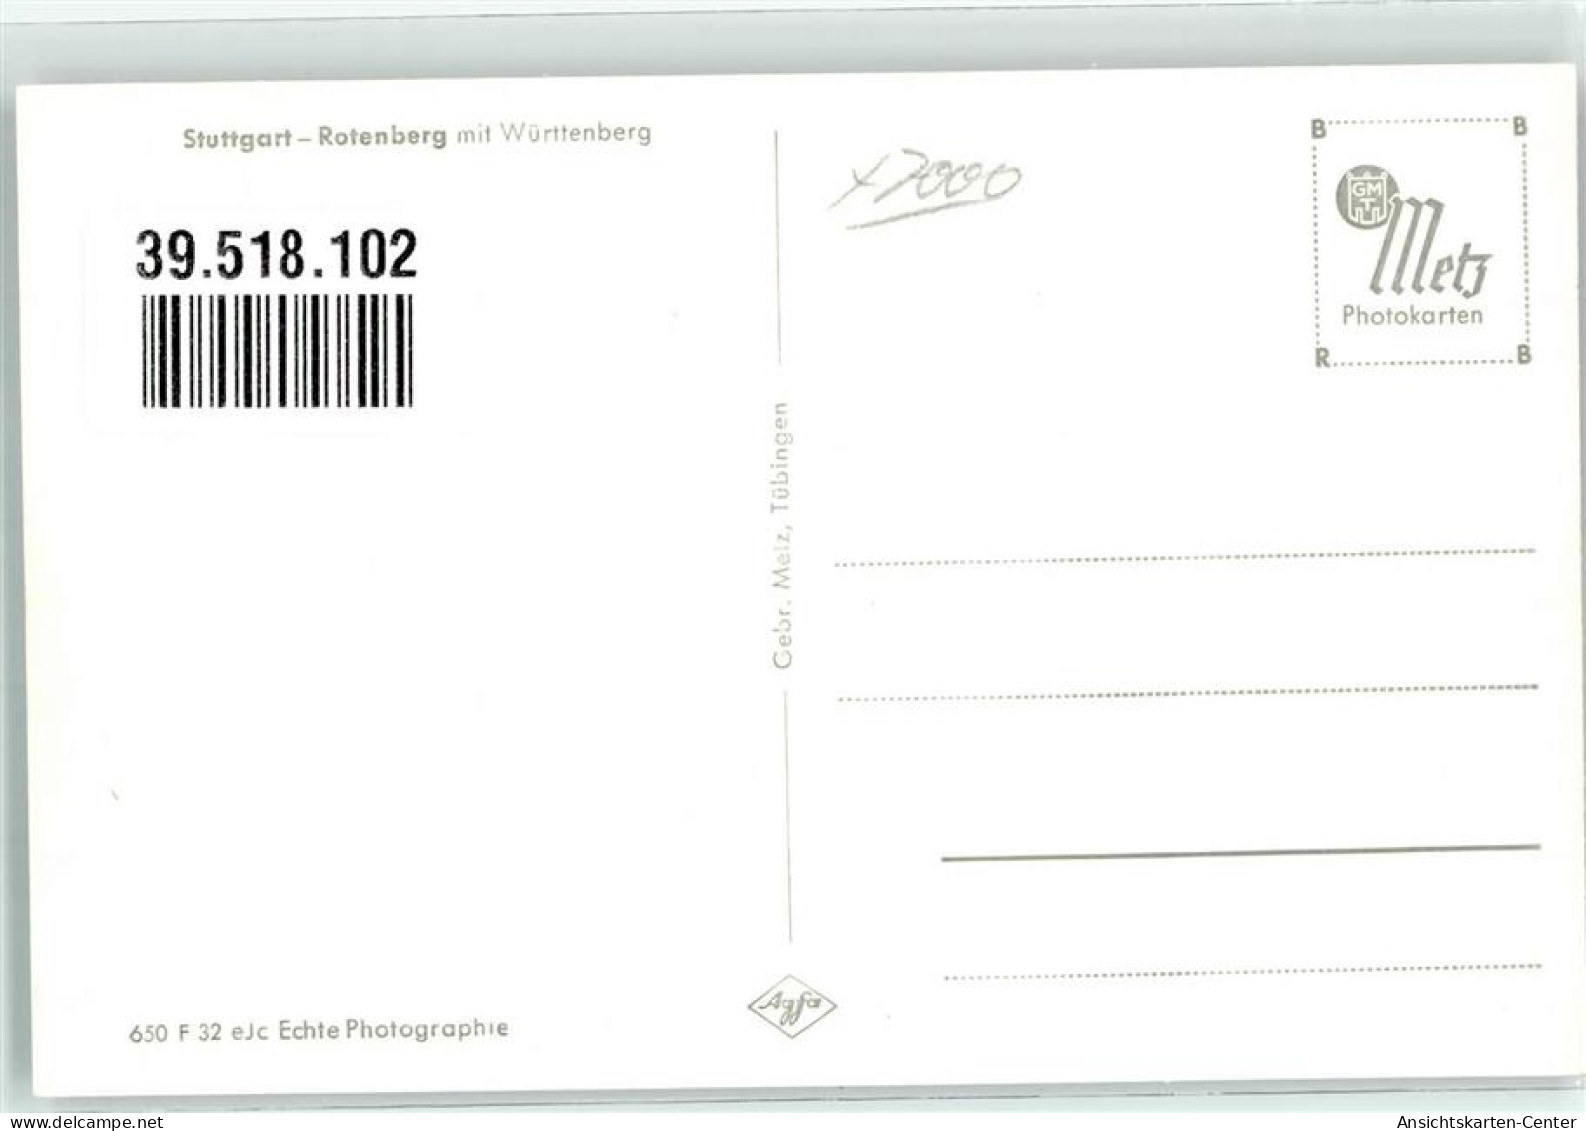 39518102 - Rotenberg - Stuttgart